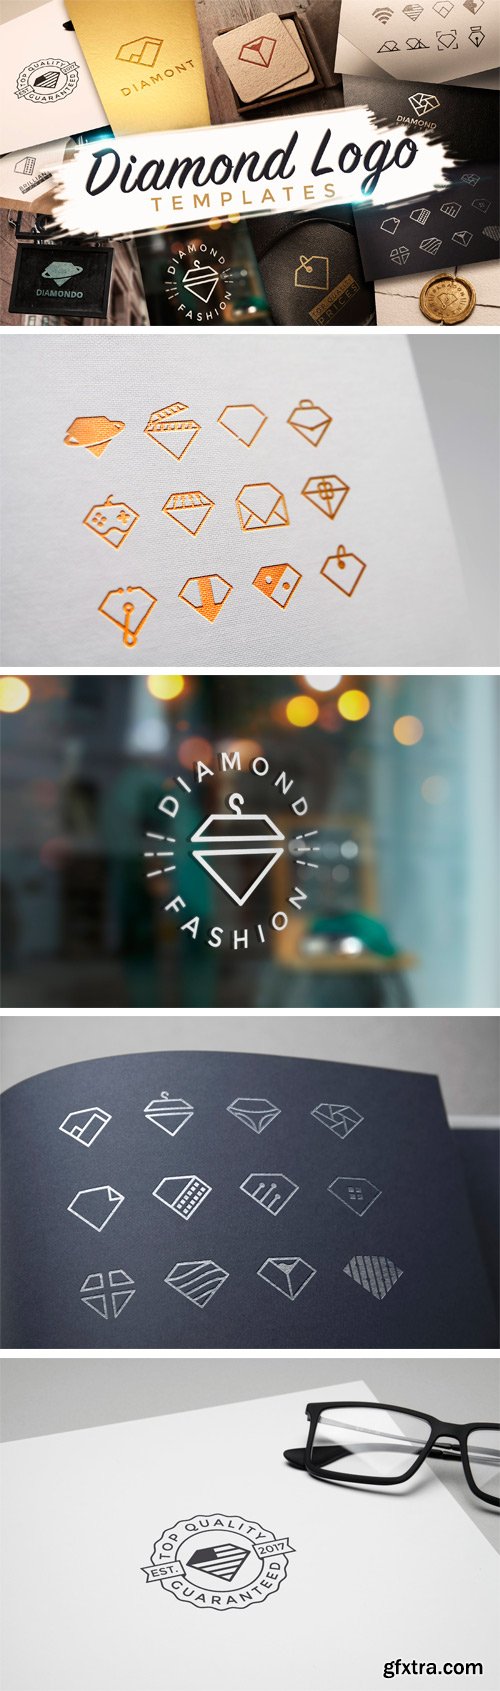 CM 1527486 - 32 Brilliant Diamond Logo Templates